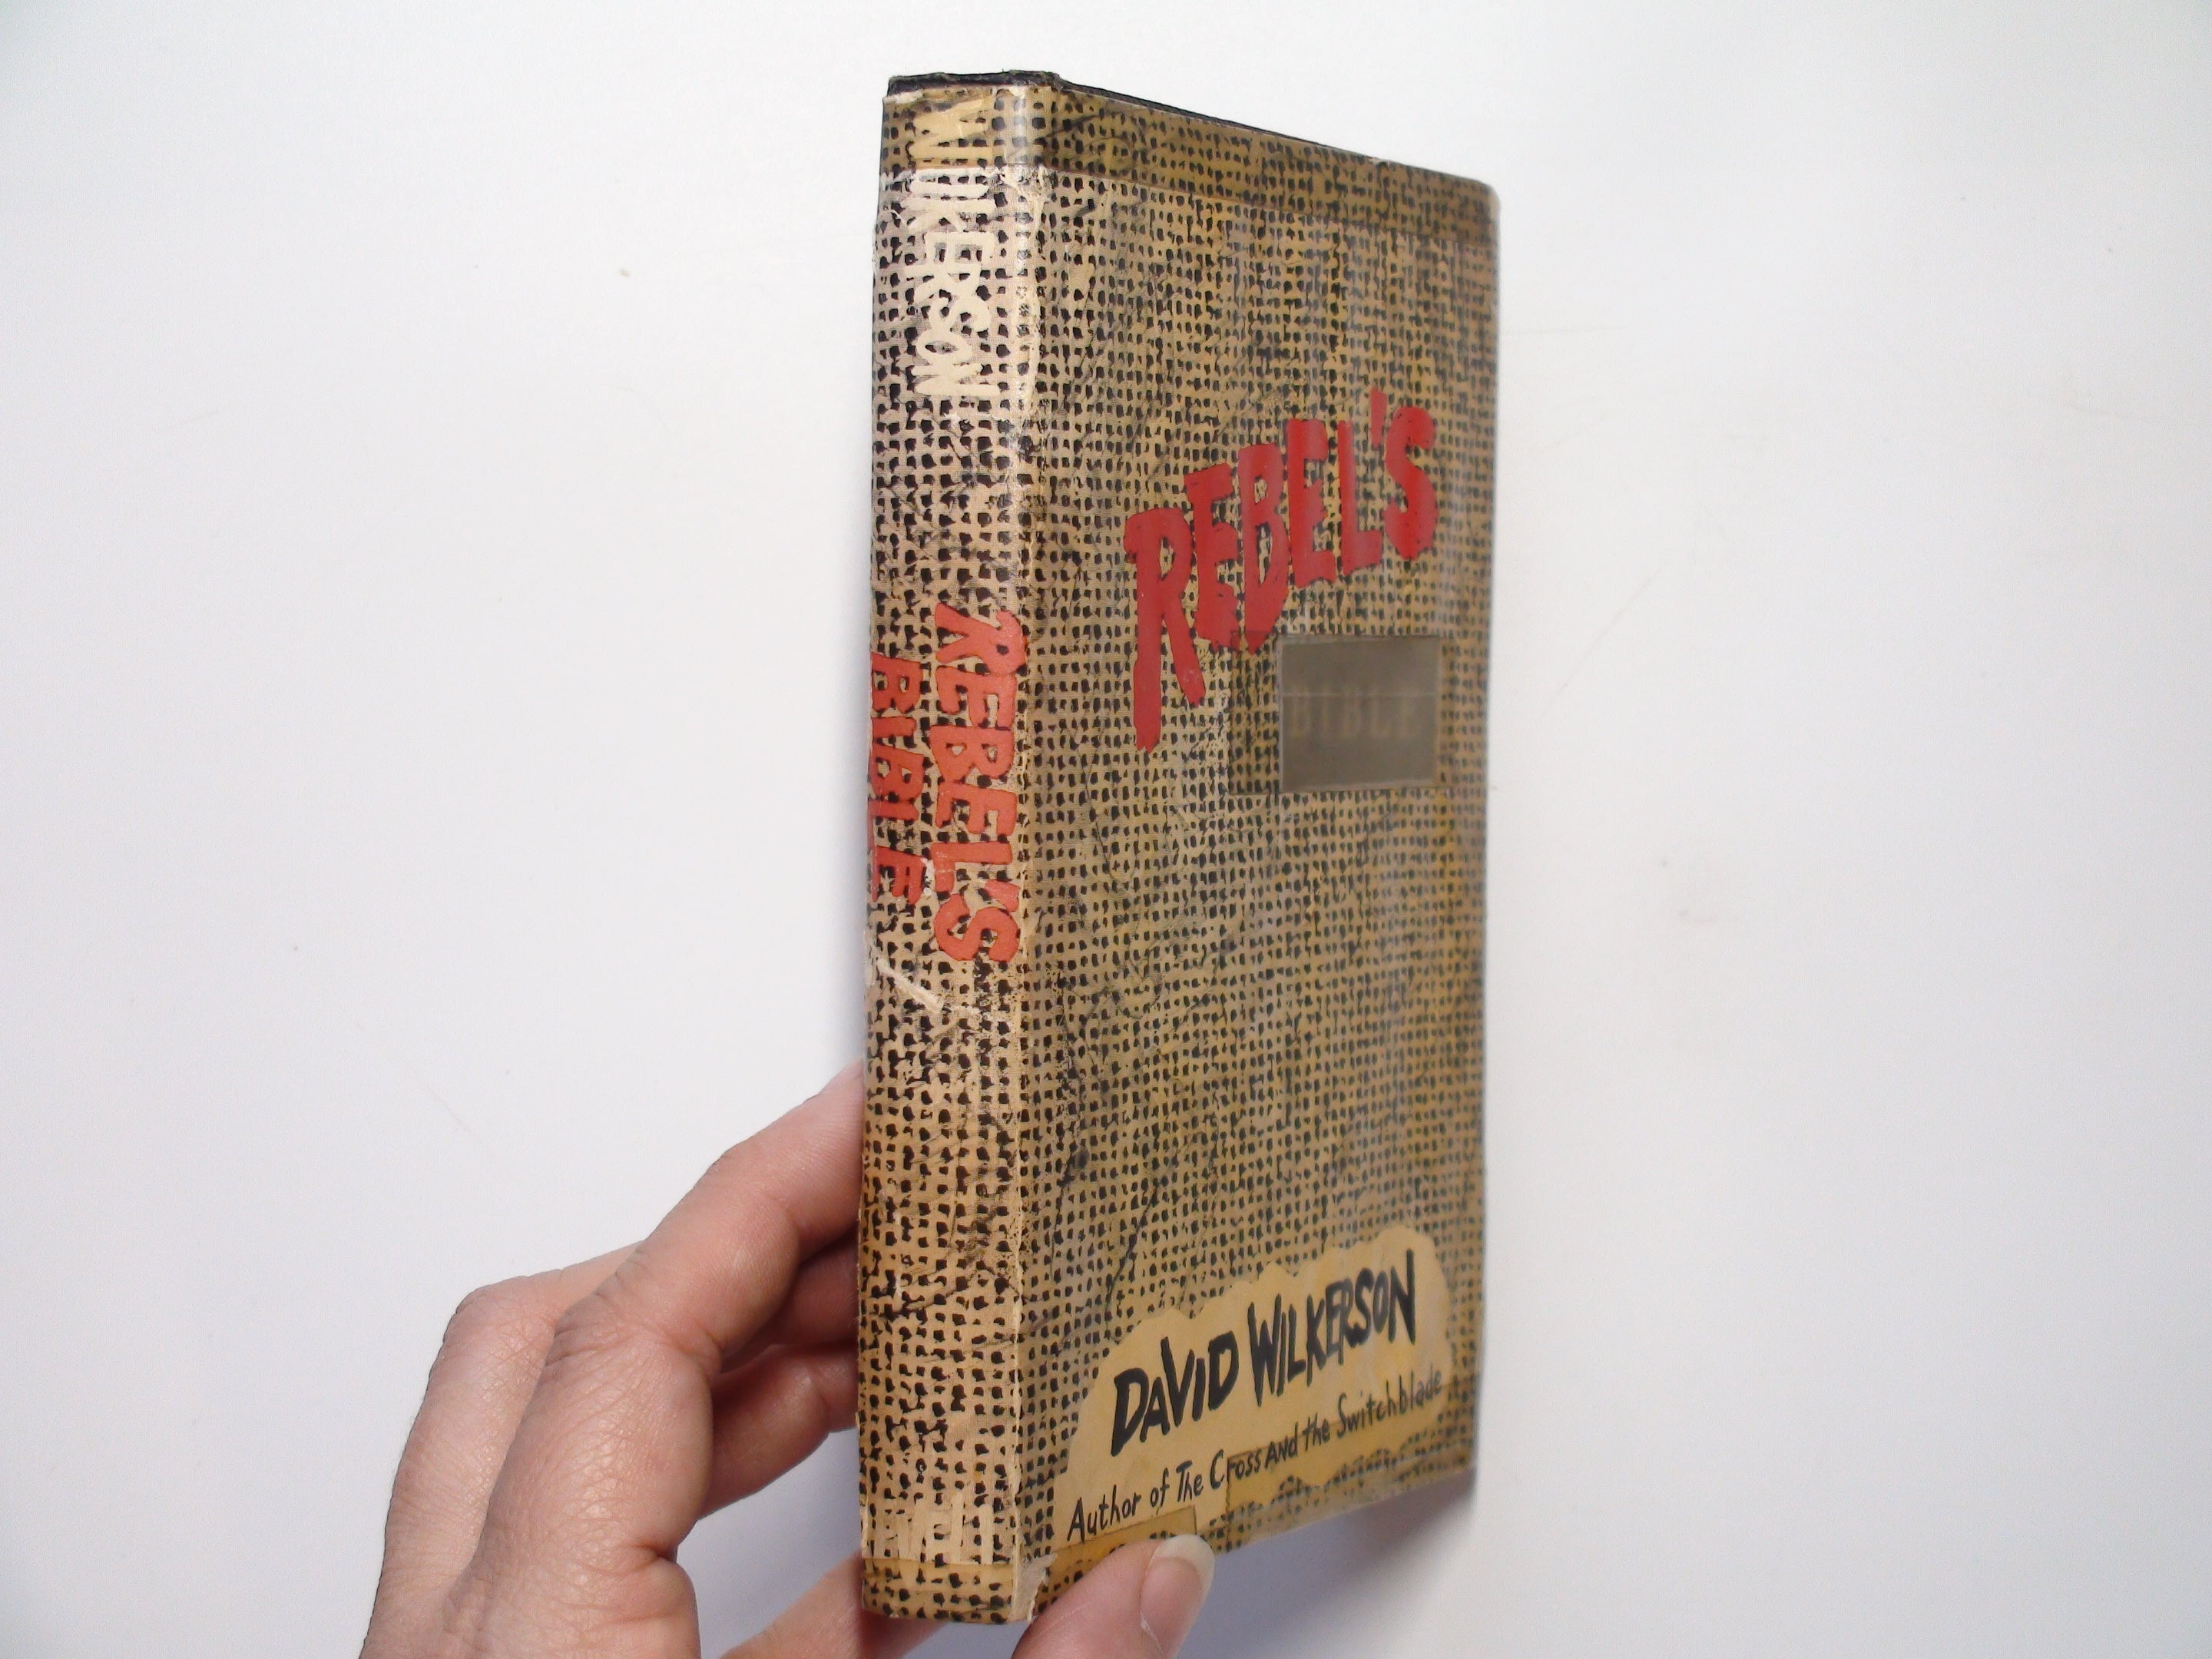 Rebel's Bible, David Wilkenson, with DJ, 1st Ed., 1970